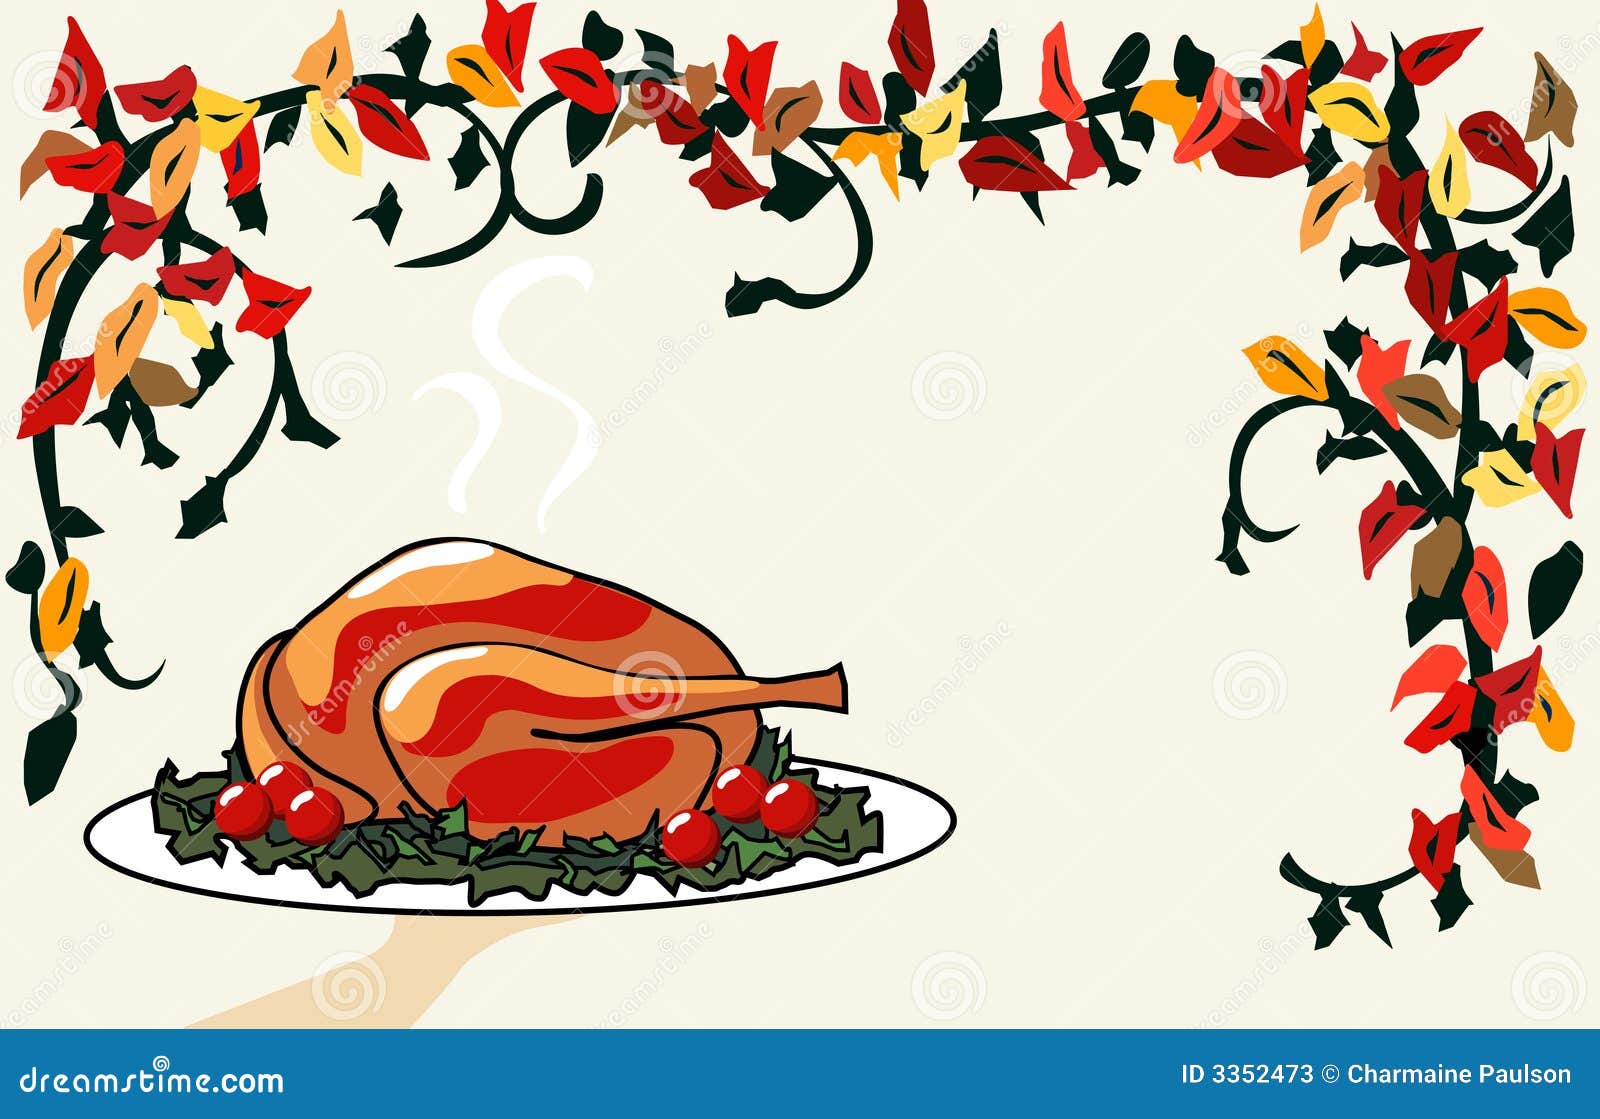 turkey eating pie clipart border